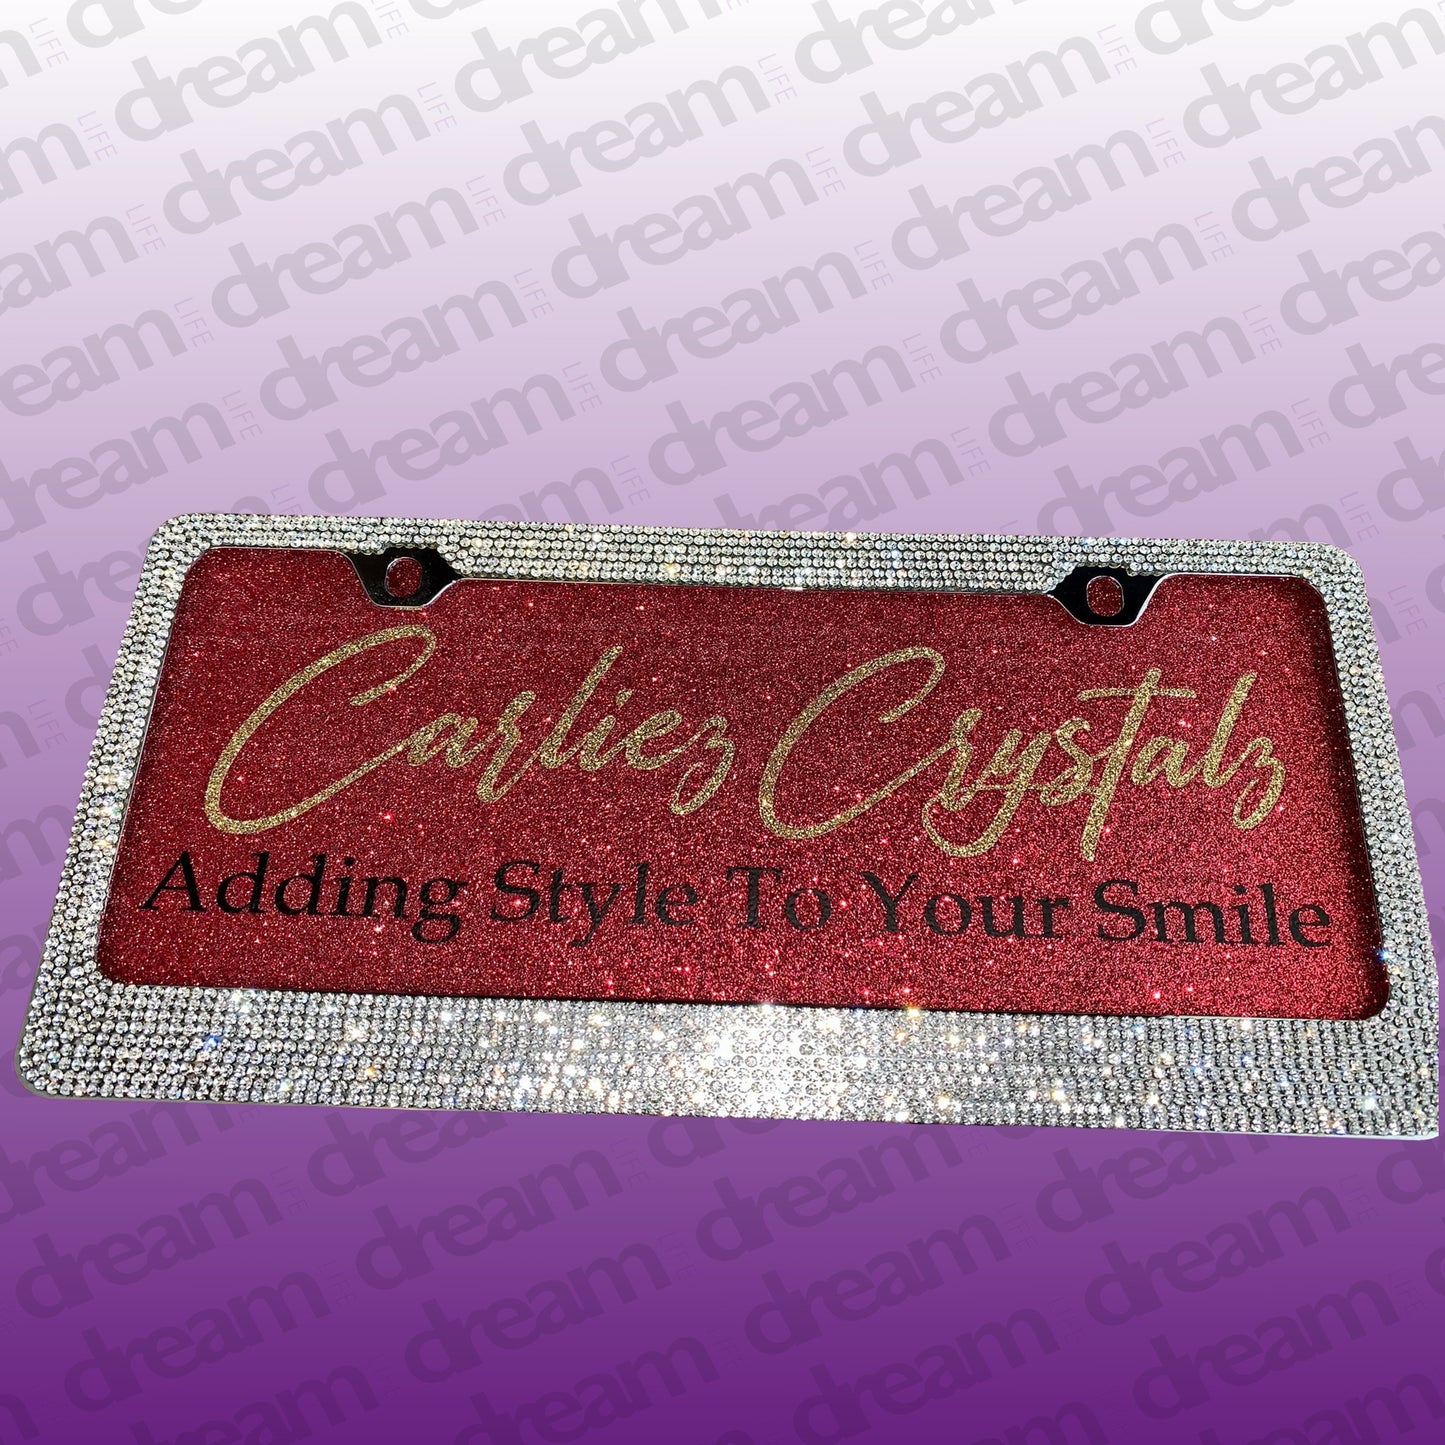 Custom License Plates with Crystal Frame